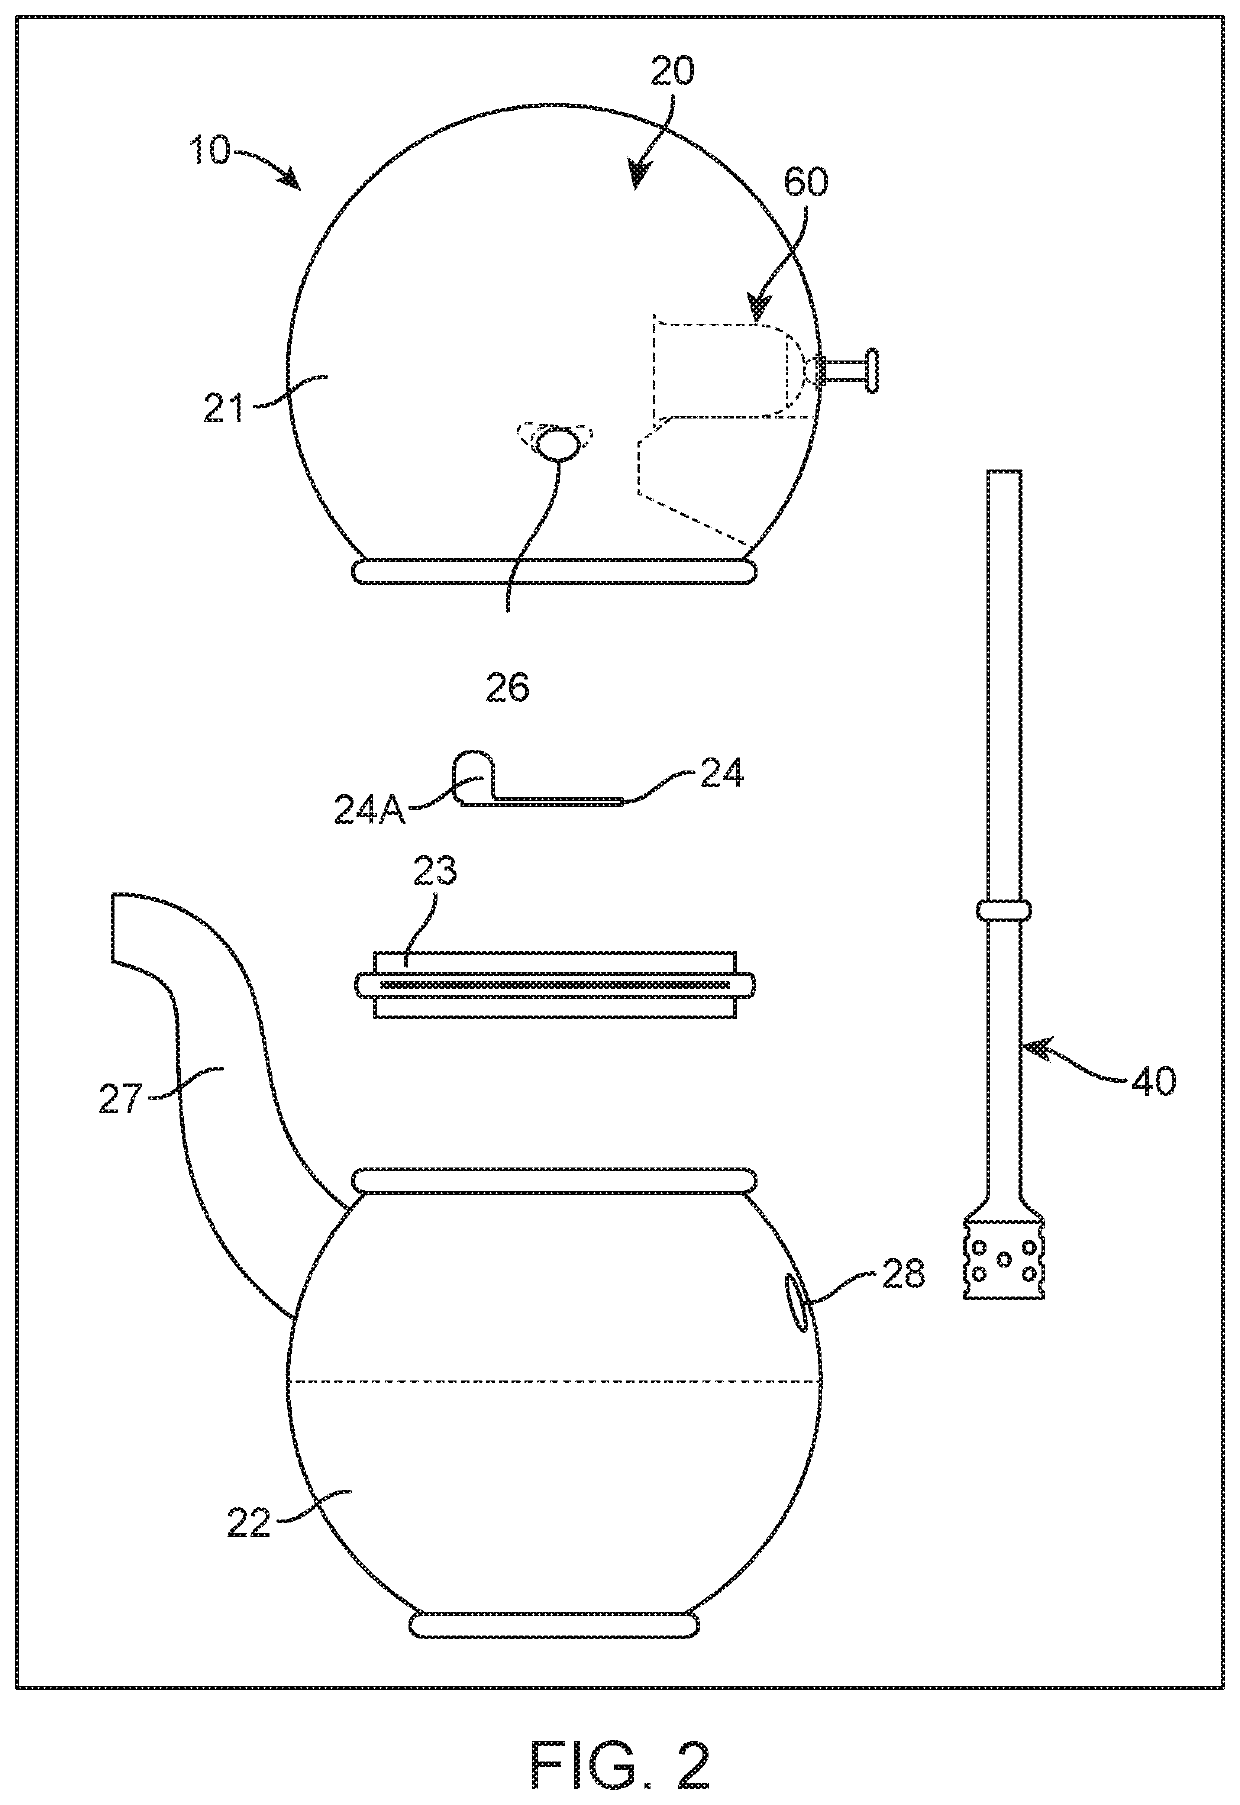 Kief diffusion apparatus and product